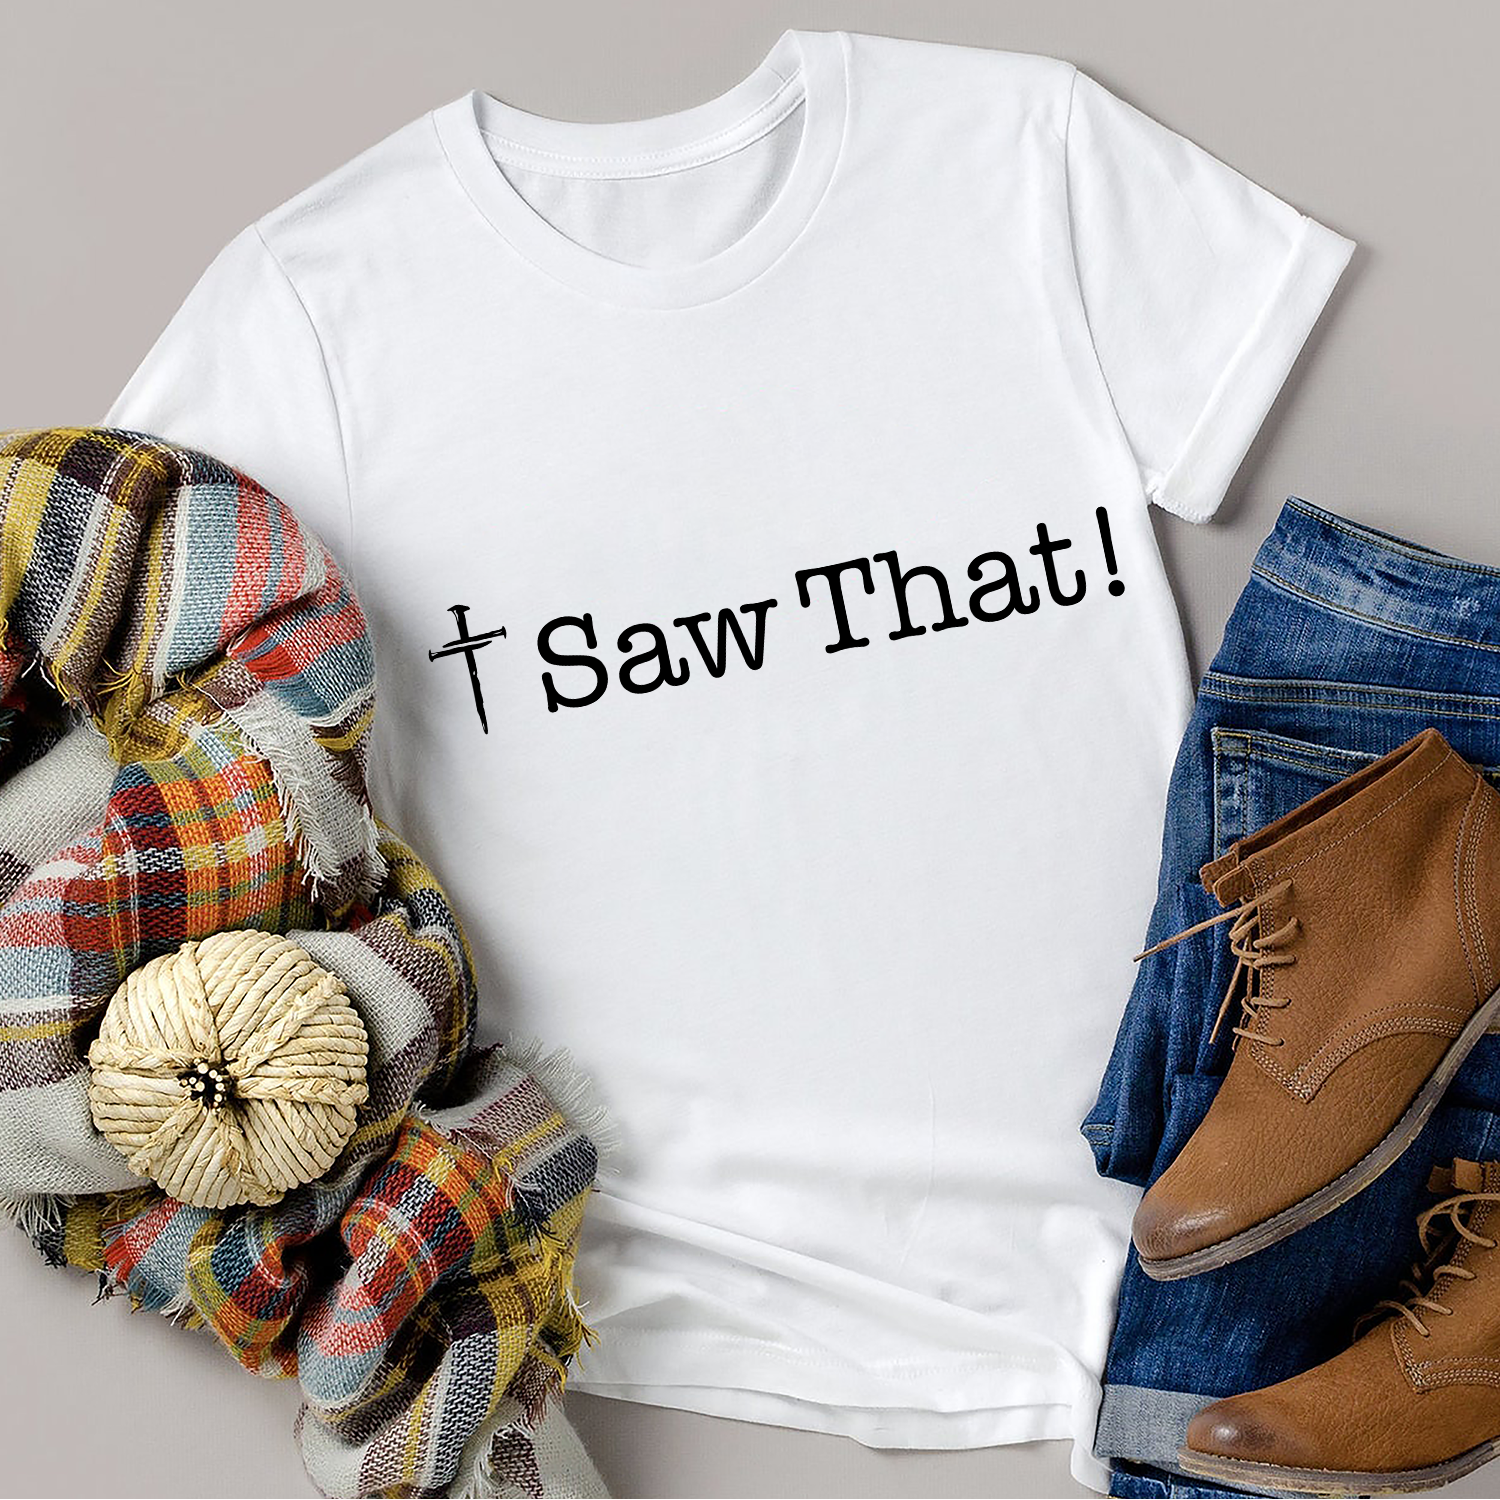 I SAW THAT!: Funny Jesus Meme Great Fun Christian Gift Standard T-Shirt